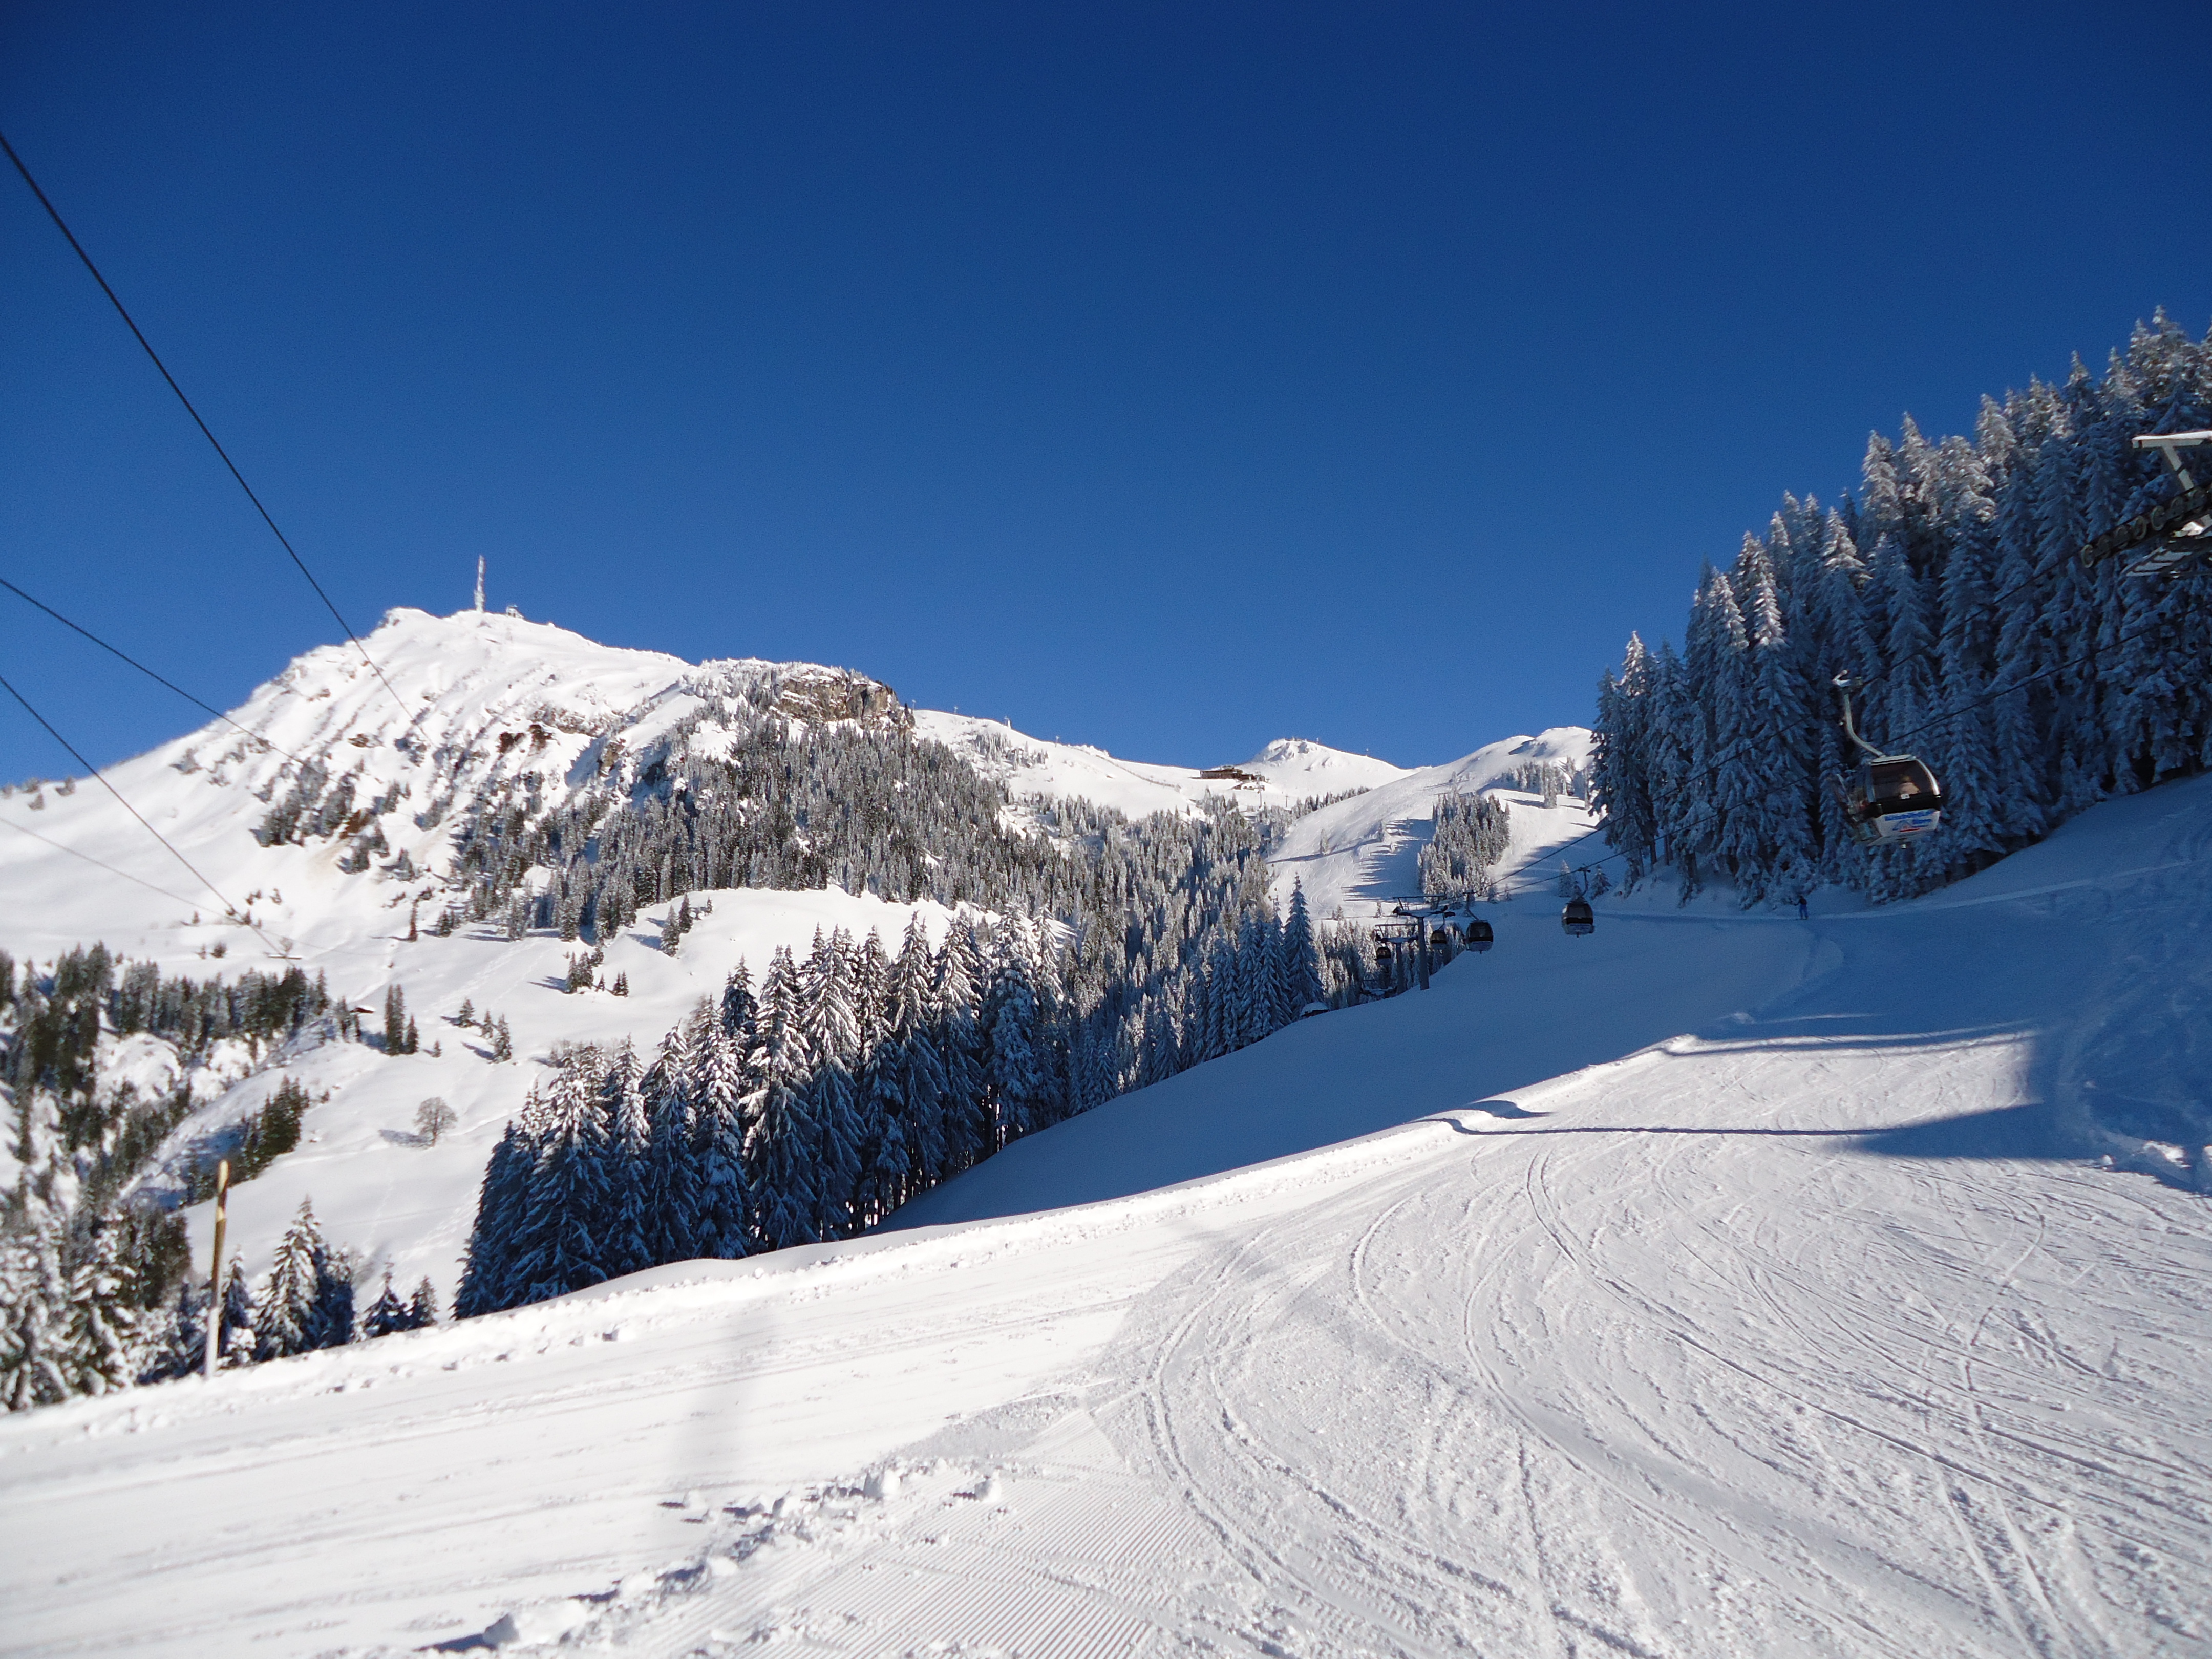 Ski Slopes In Kitzbuehel Austria Wallpaper And Image